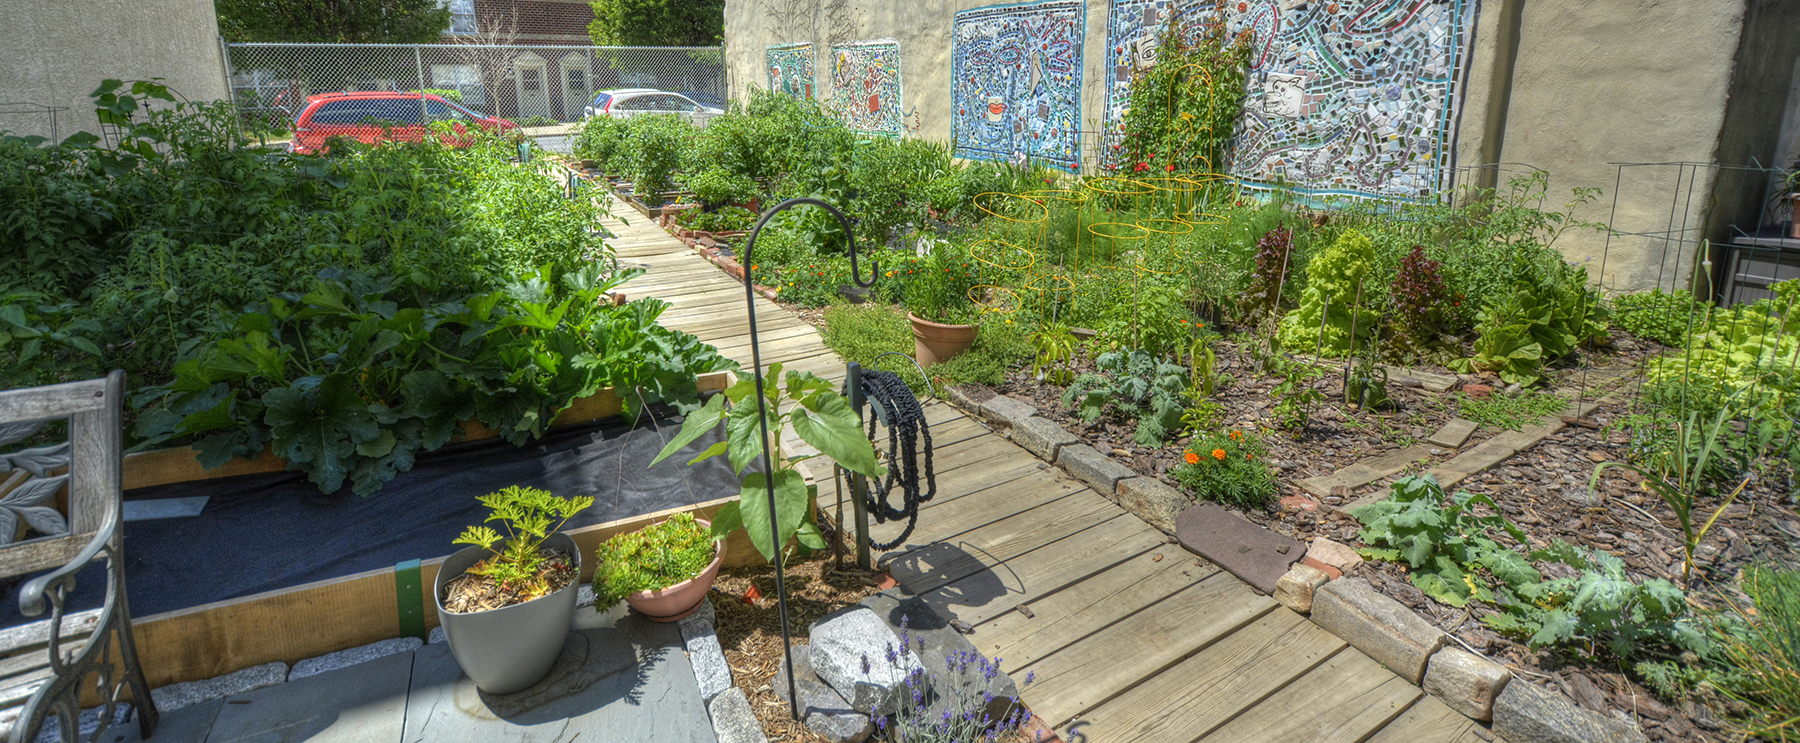 The Top 8 Newbie Urban Gardening Mistakes